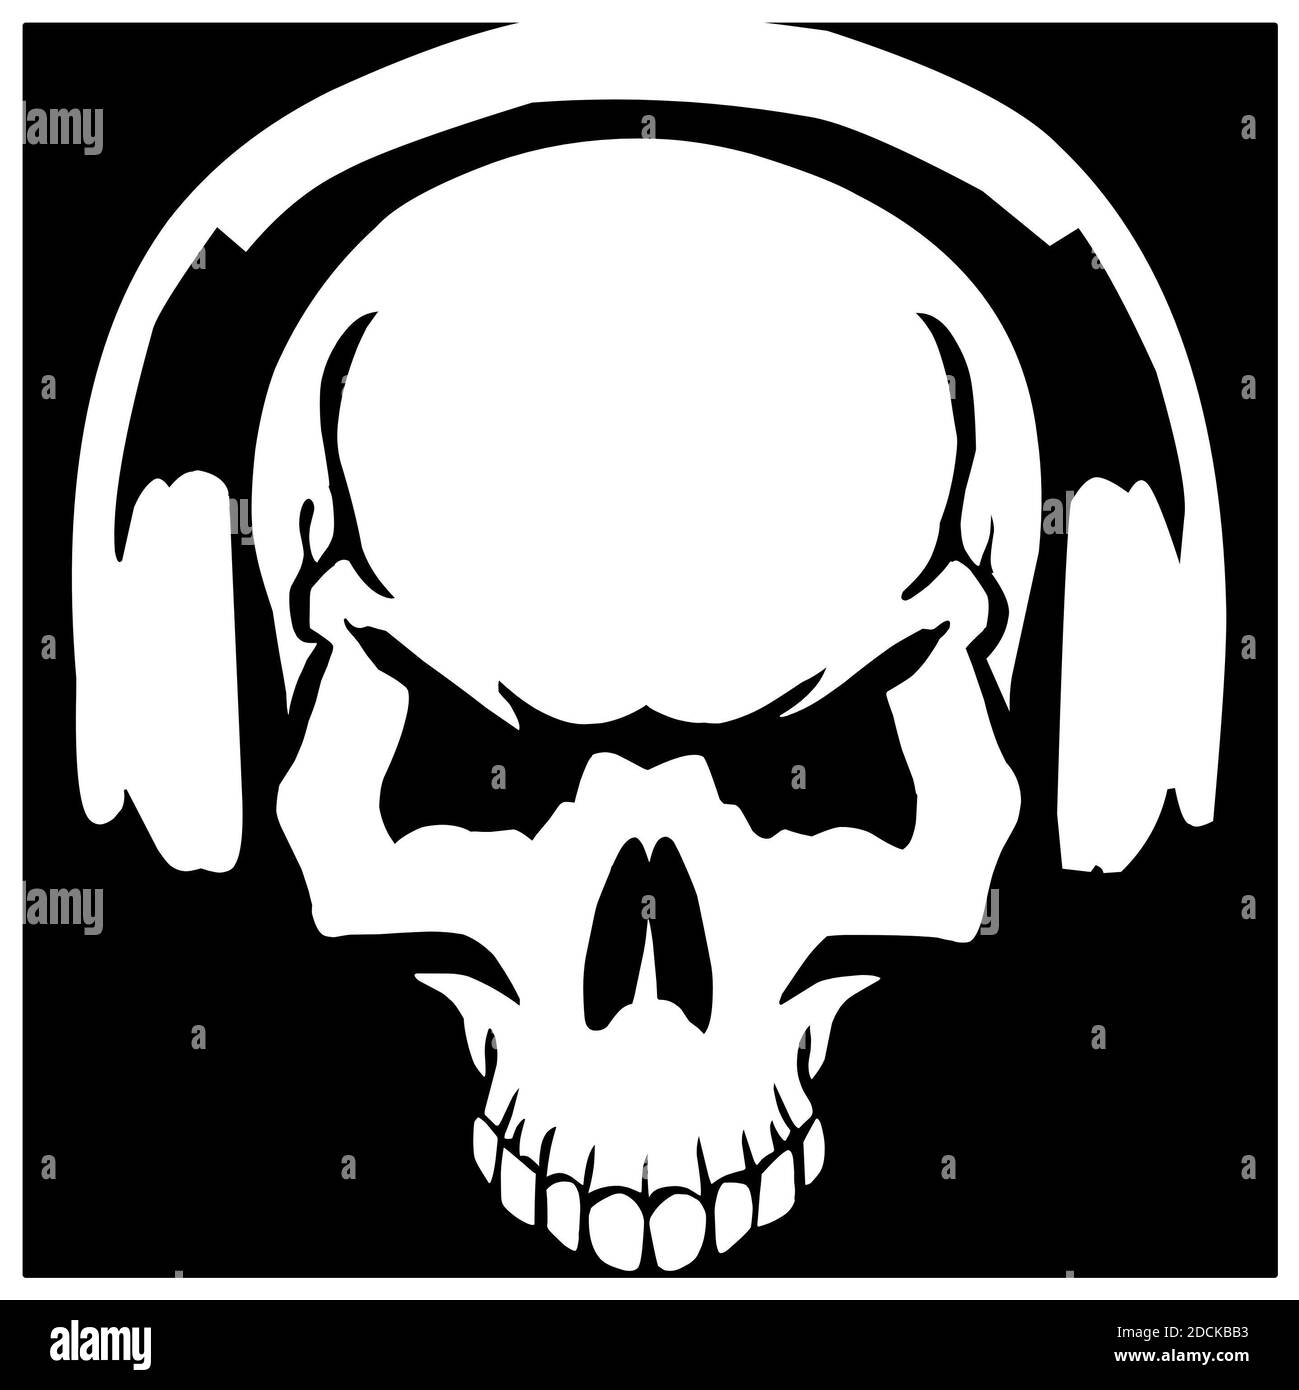 Skull in a headphones illustration Stock Photo